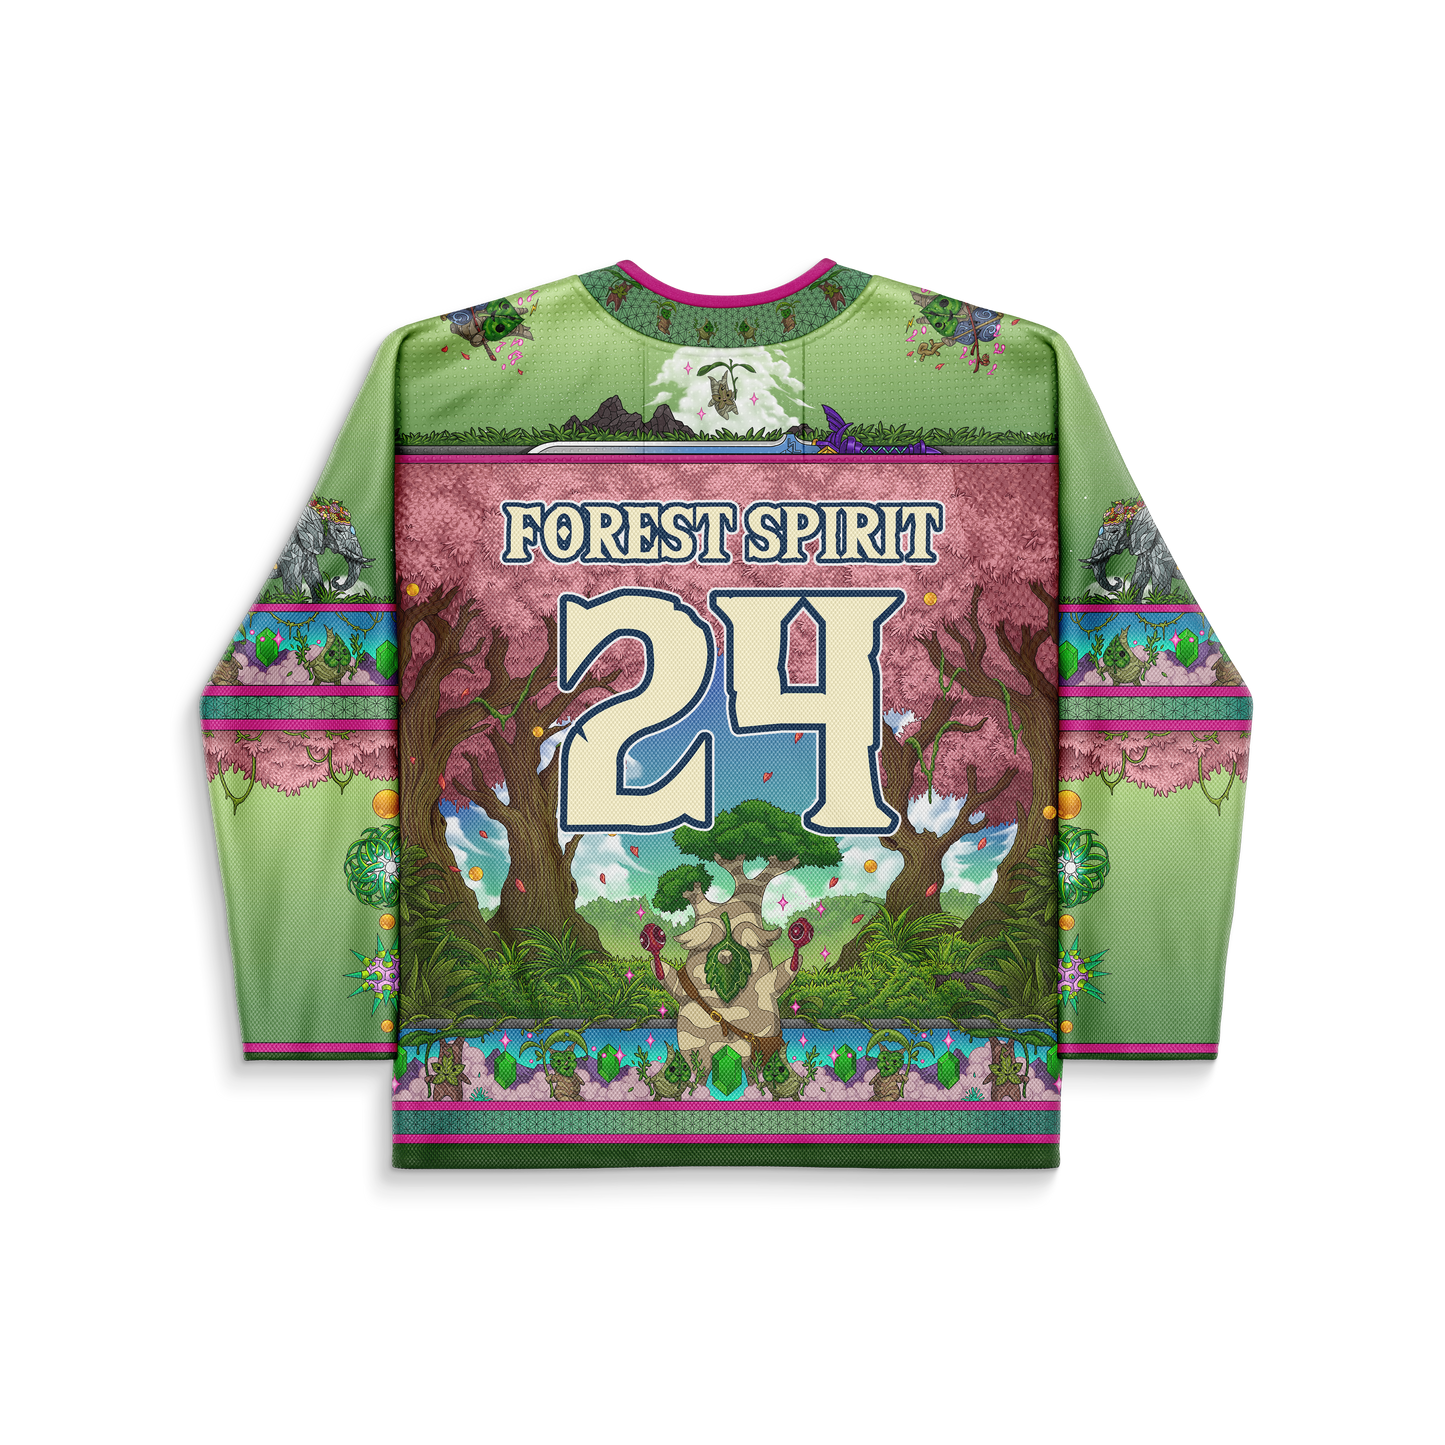 Electric Forest x Legend of Zelda Hockey Jersey (PRE-ORDER)